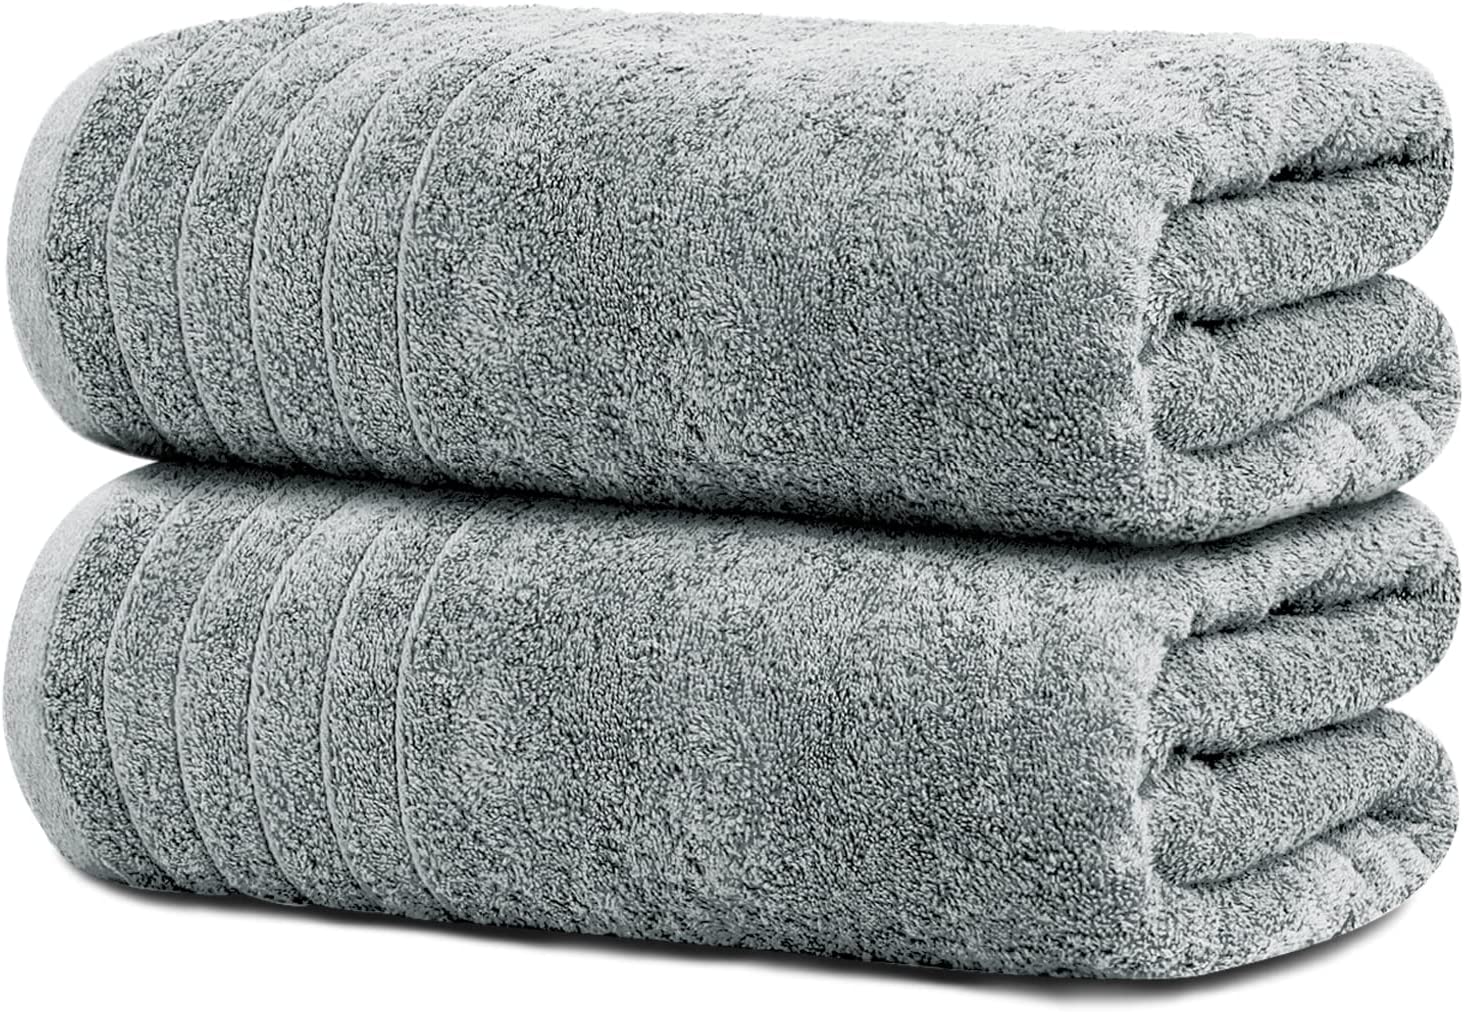  Tens Towels 8 Piece Towels Set, 2 Extra Large Bath